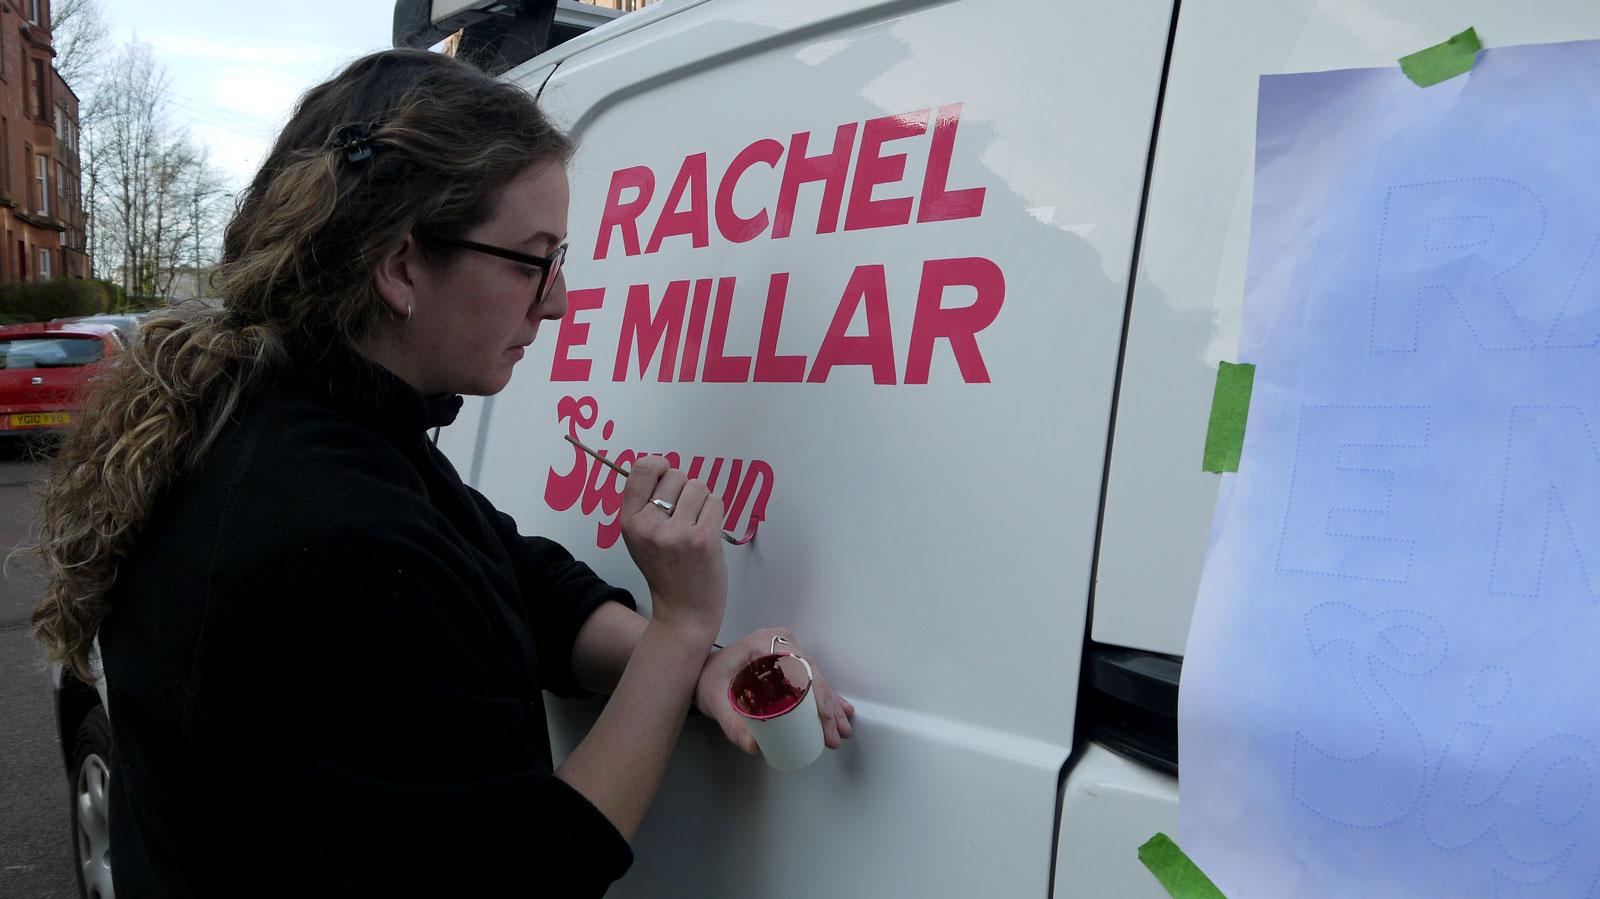 Rachel Millar, signwriter